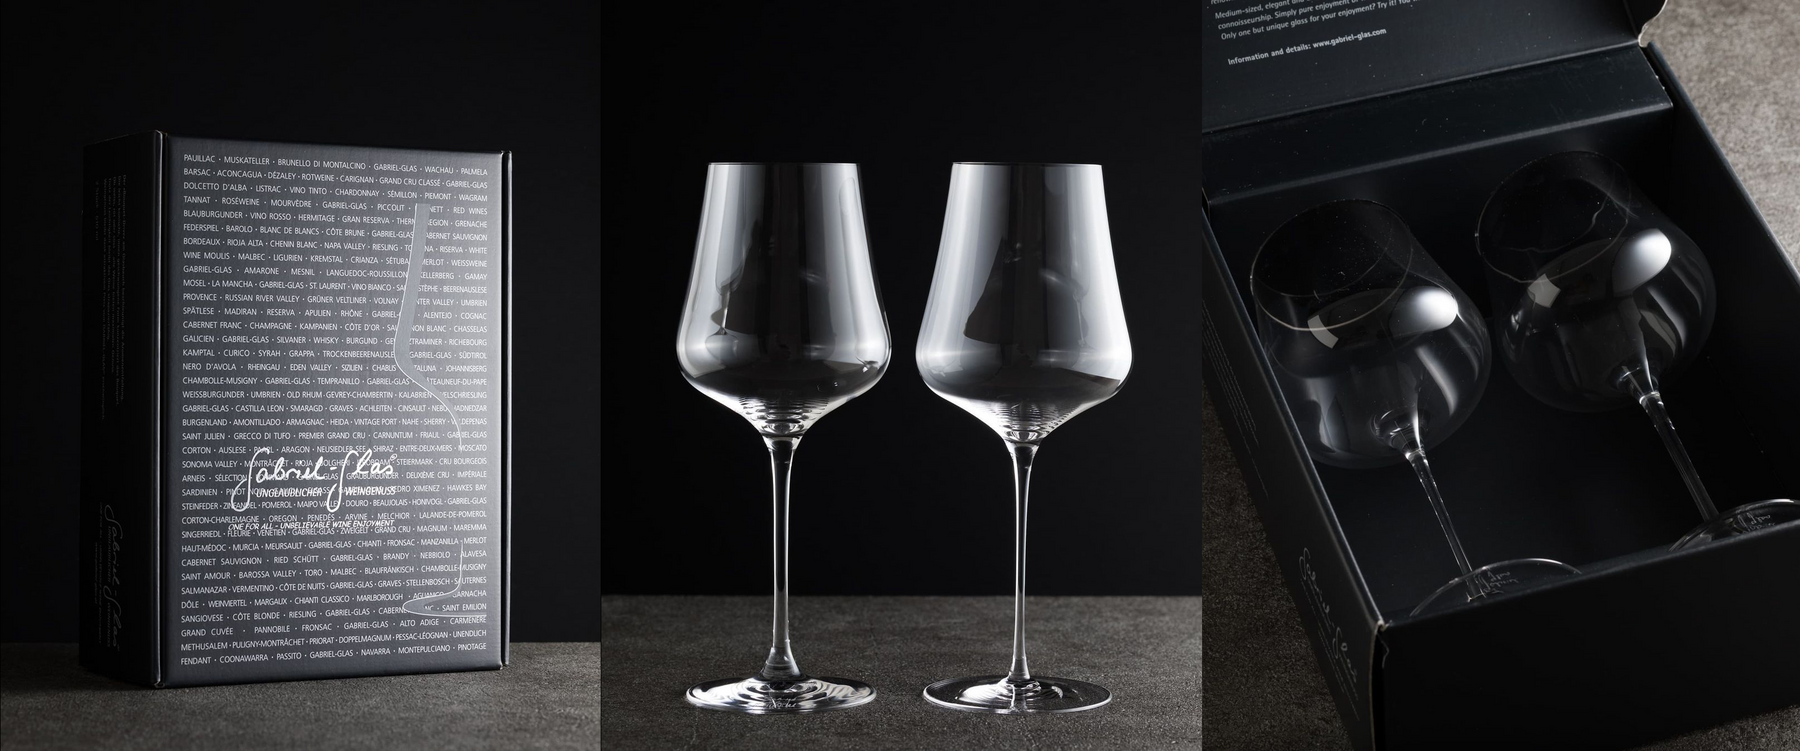 StandArt Universal Wine Glass - Gabriel-Glas